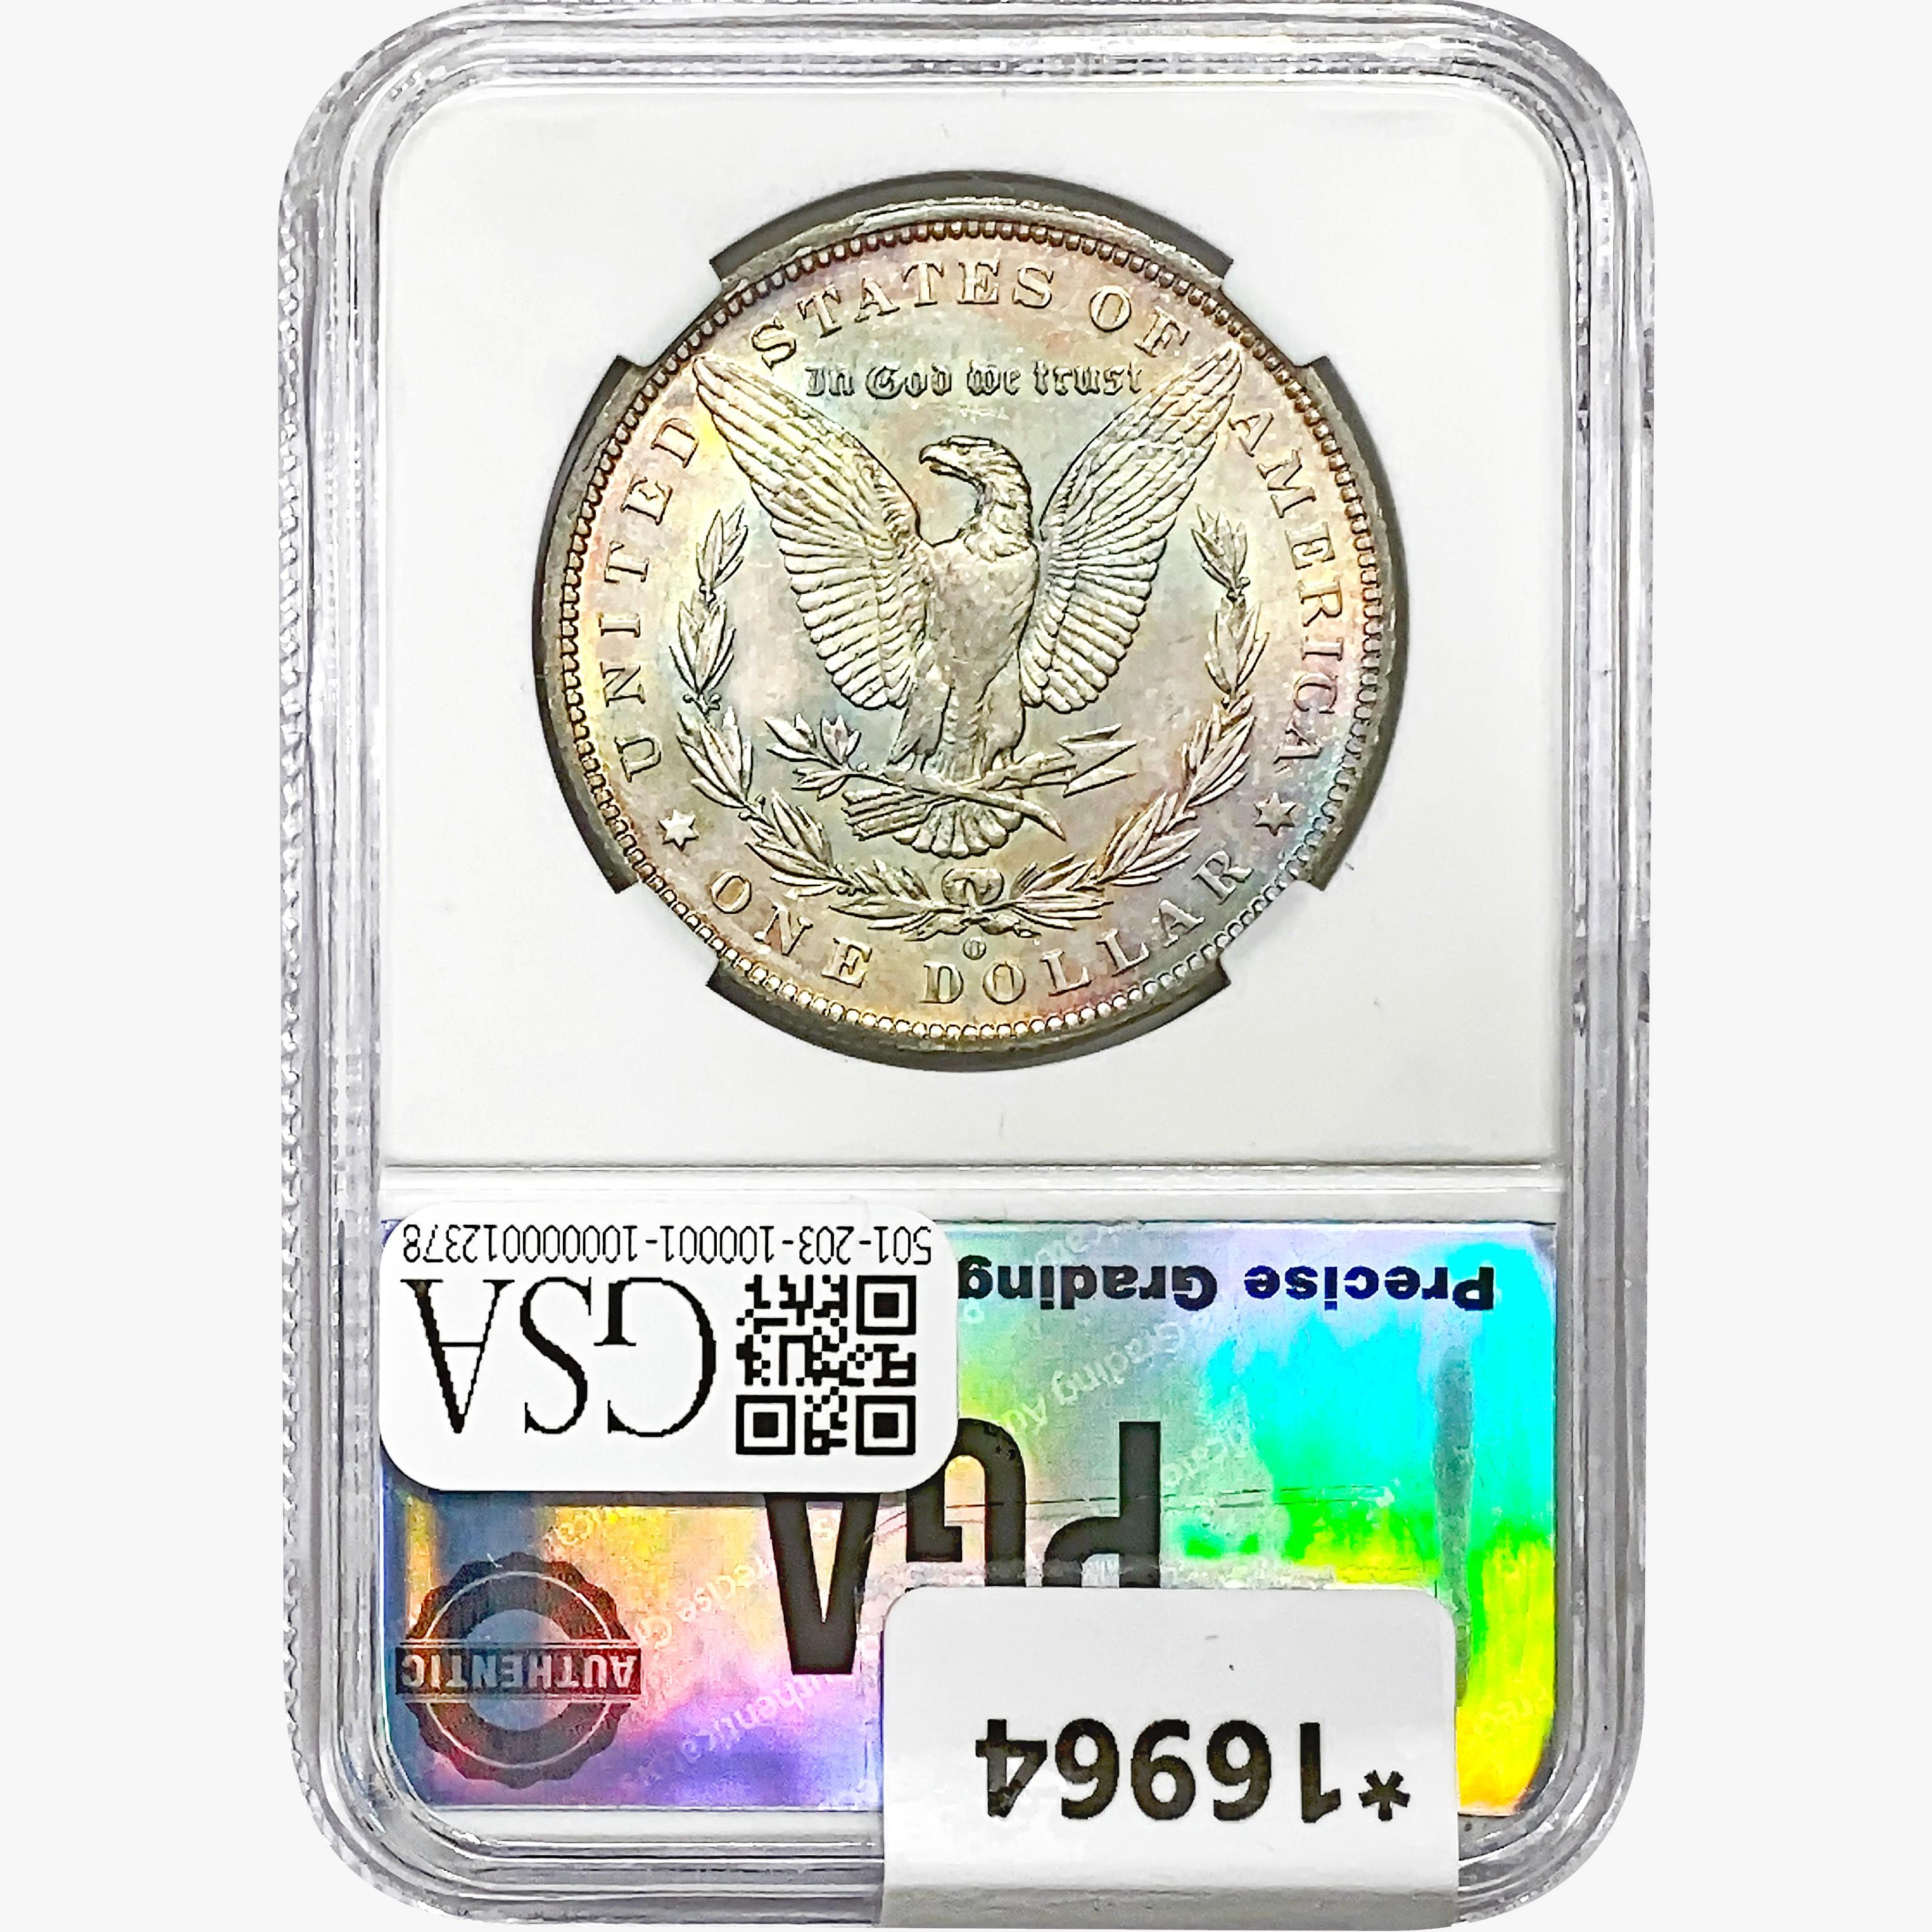 1887-O Morgan Silver Dollar PGA MS64+